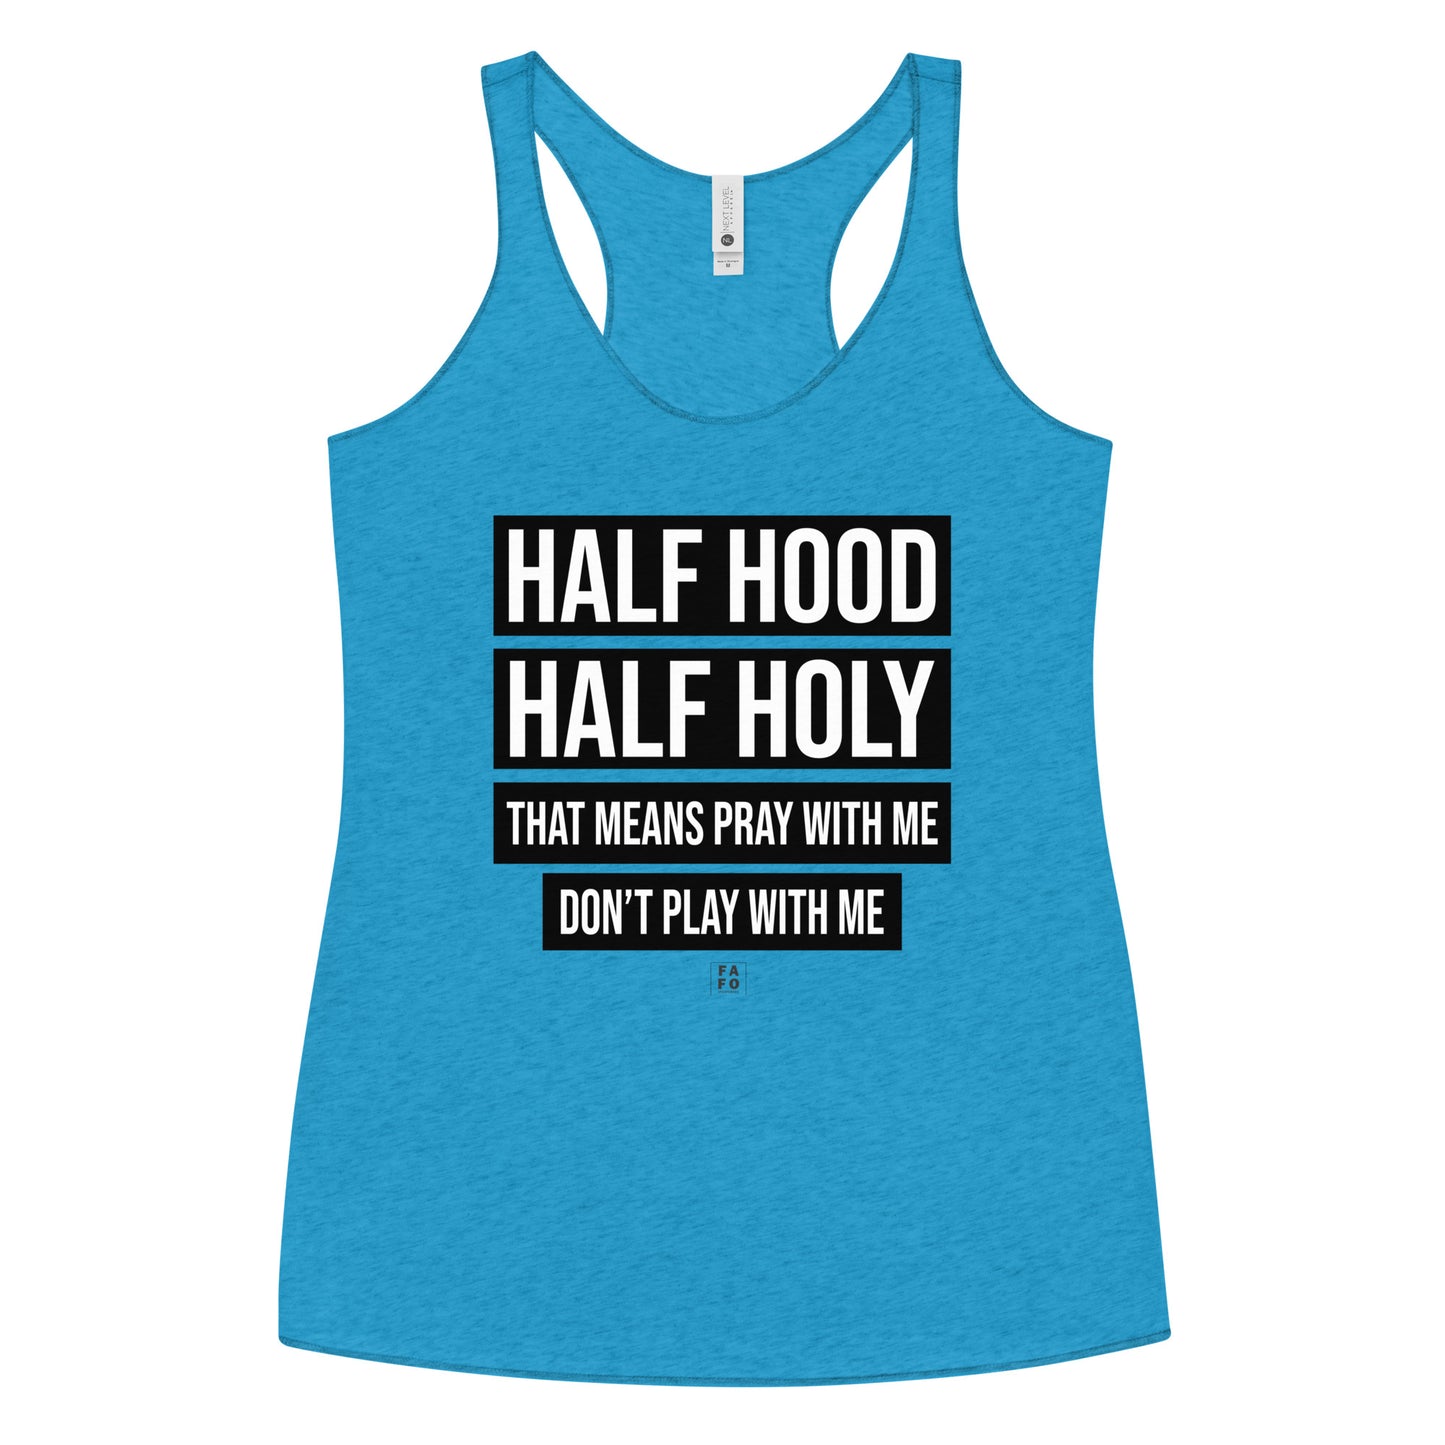 Next Level Racerback Tank - Half Hood Half Holy - FAFO Sportswear